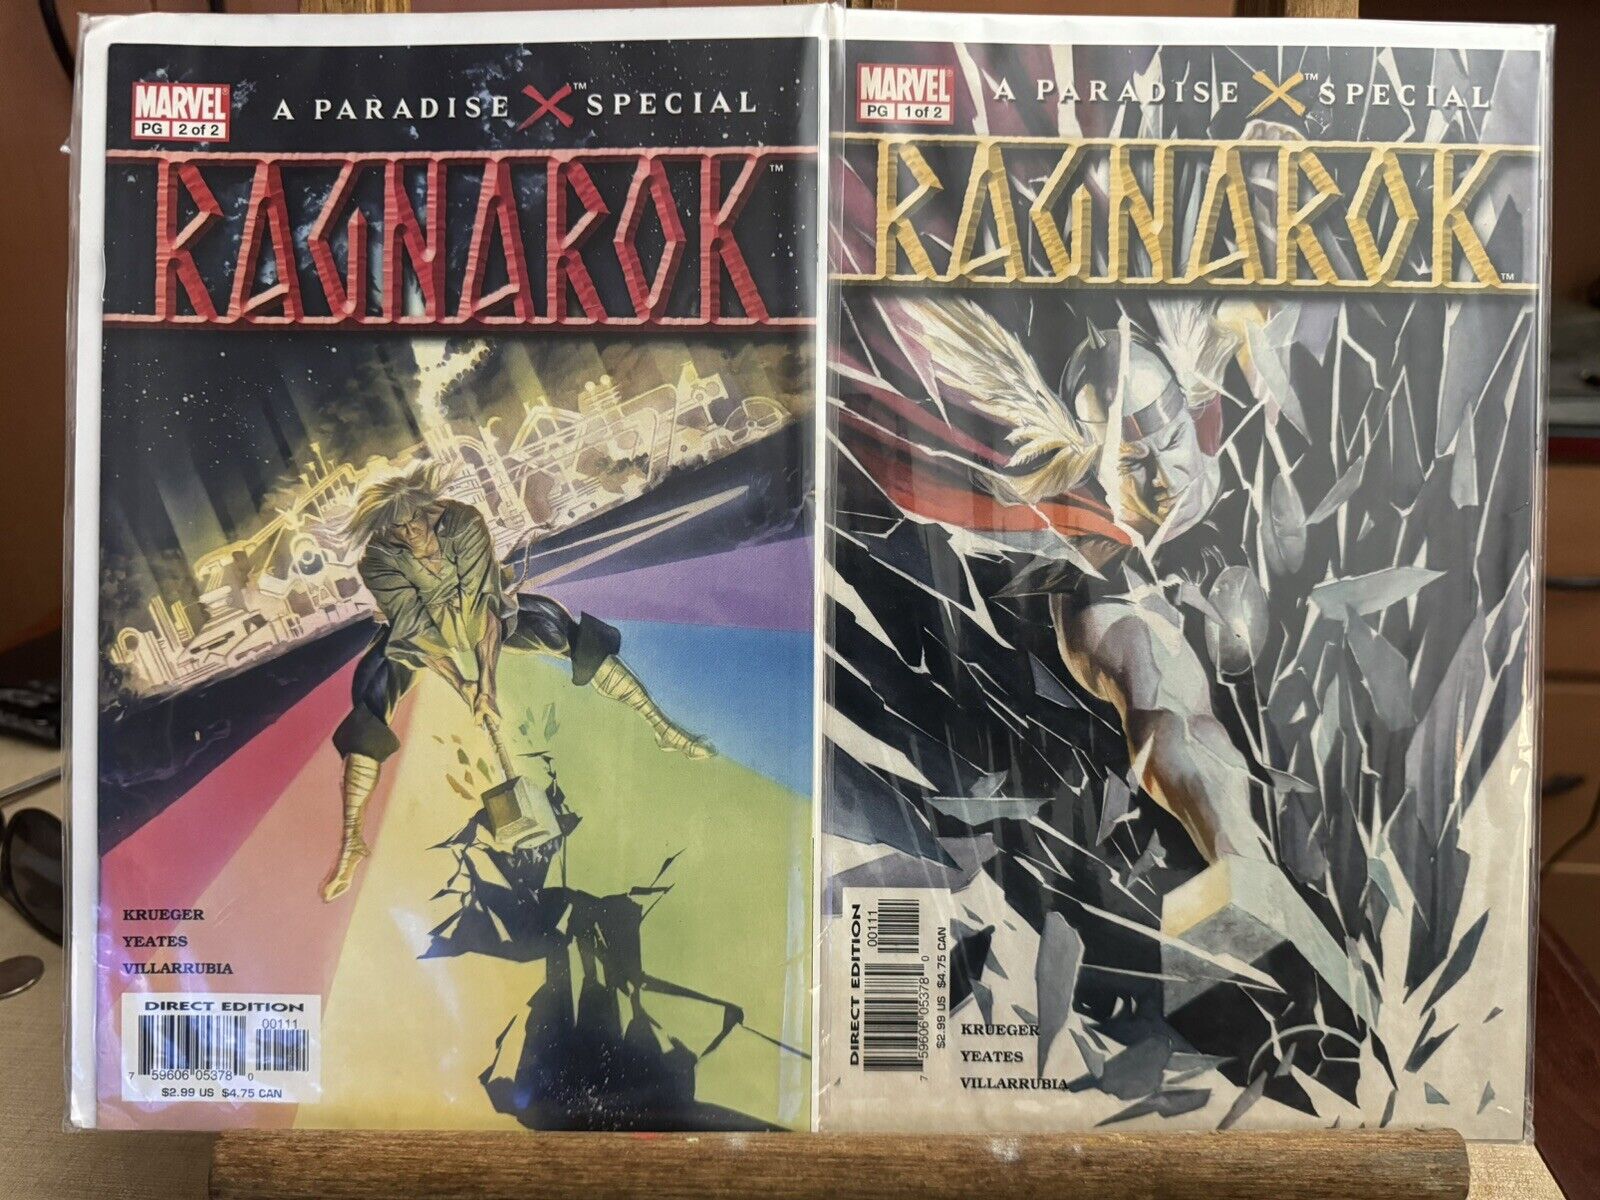 2003 MARVEL Comics RAGNAROK #1-2 Complete - A PARADISE X Special - THOR - NM